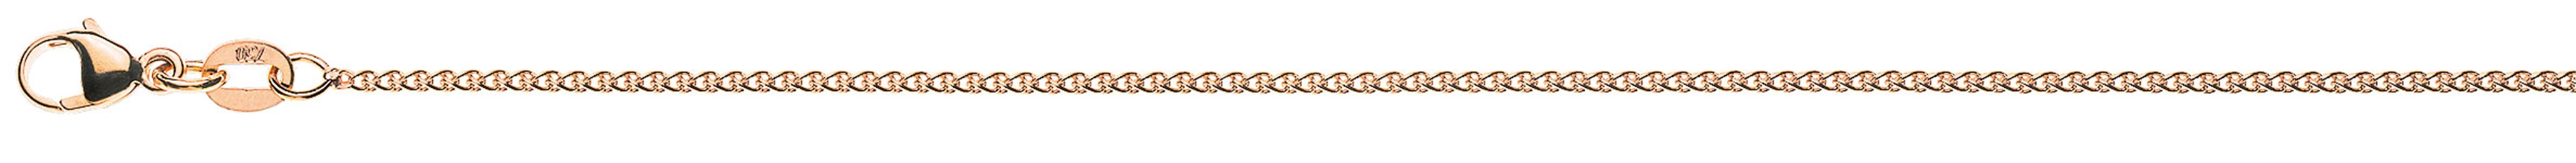 AURONOS Prestige Necklace rose gold 18K braided chain 40cm 1.2mm